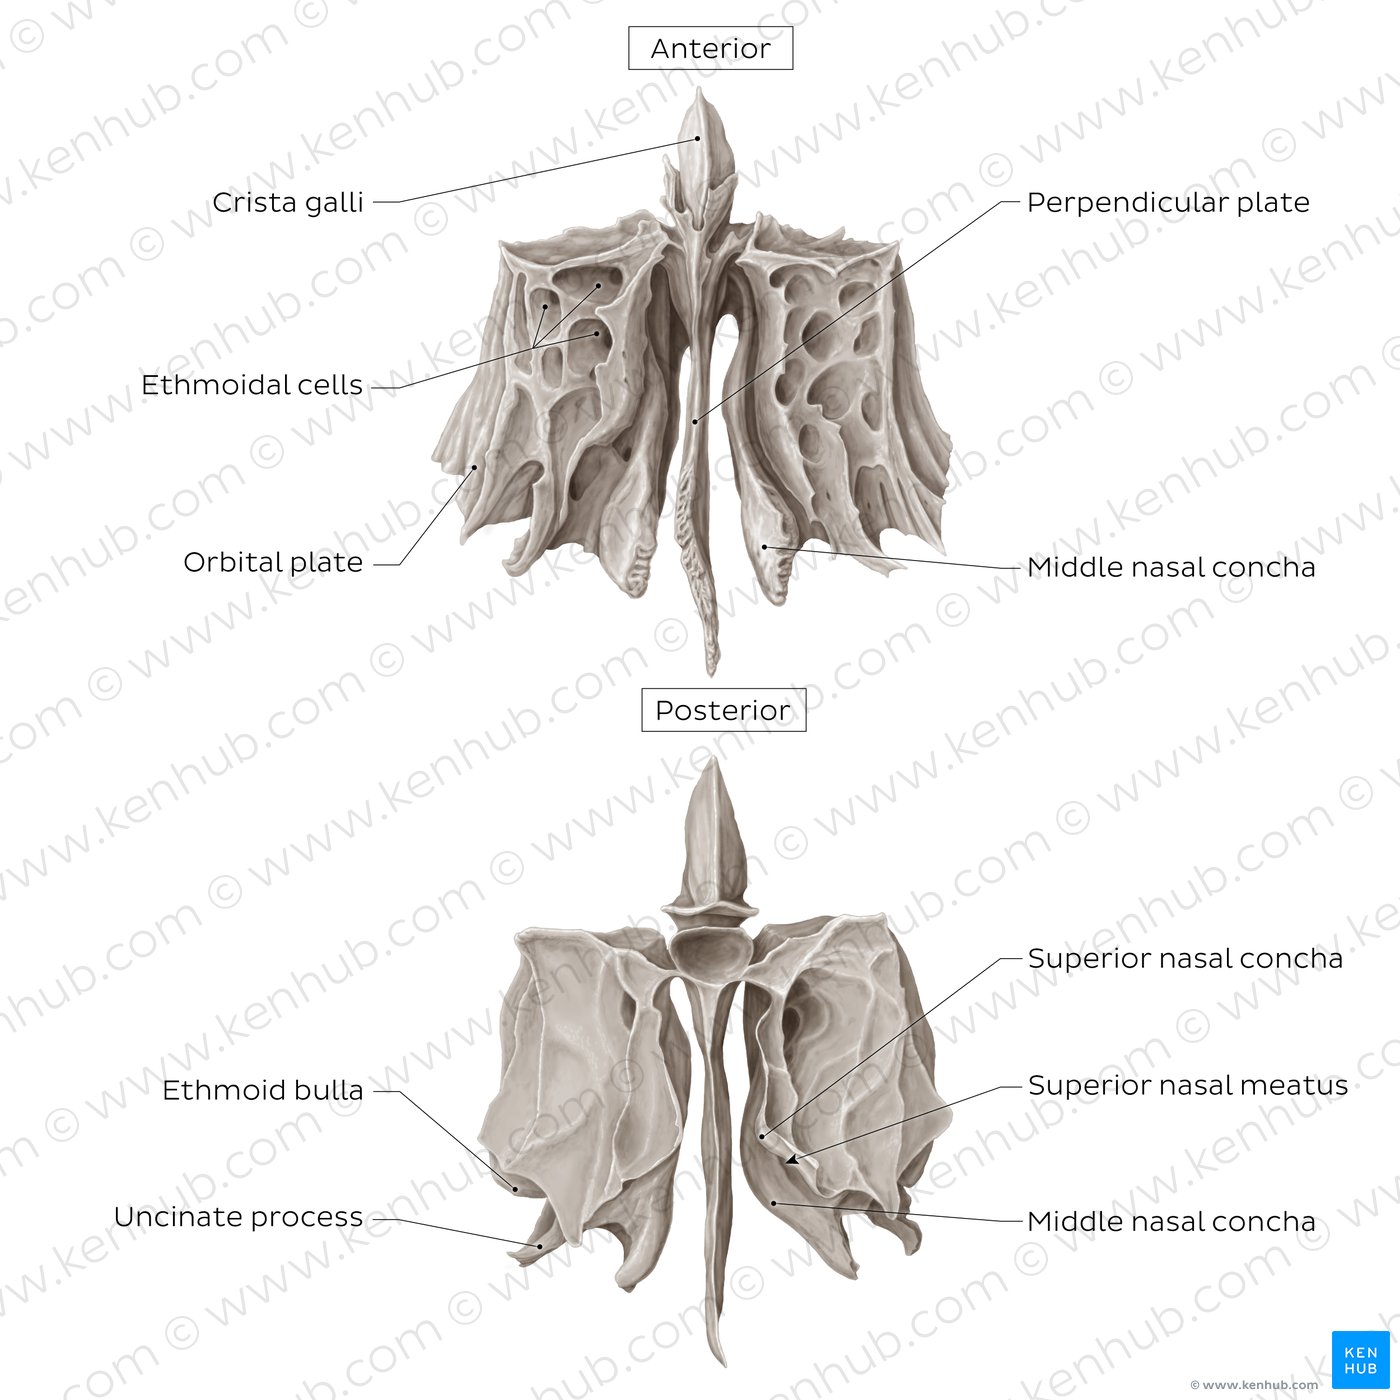 Ethmoid bone (anterior and posterior views)